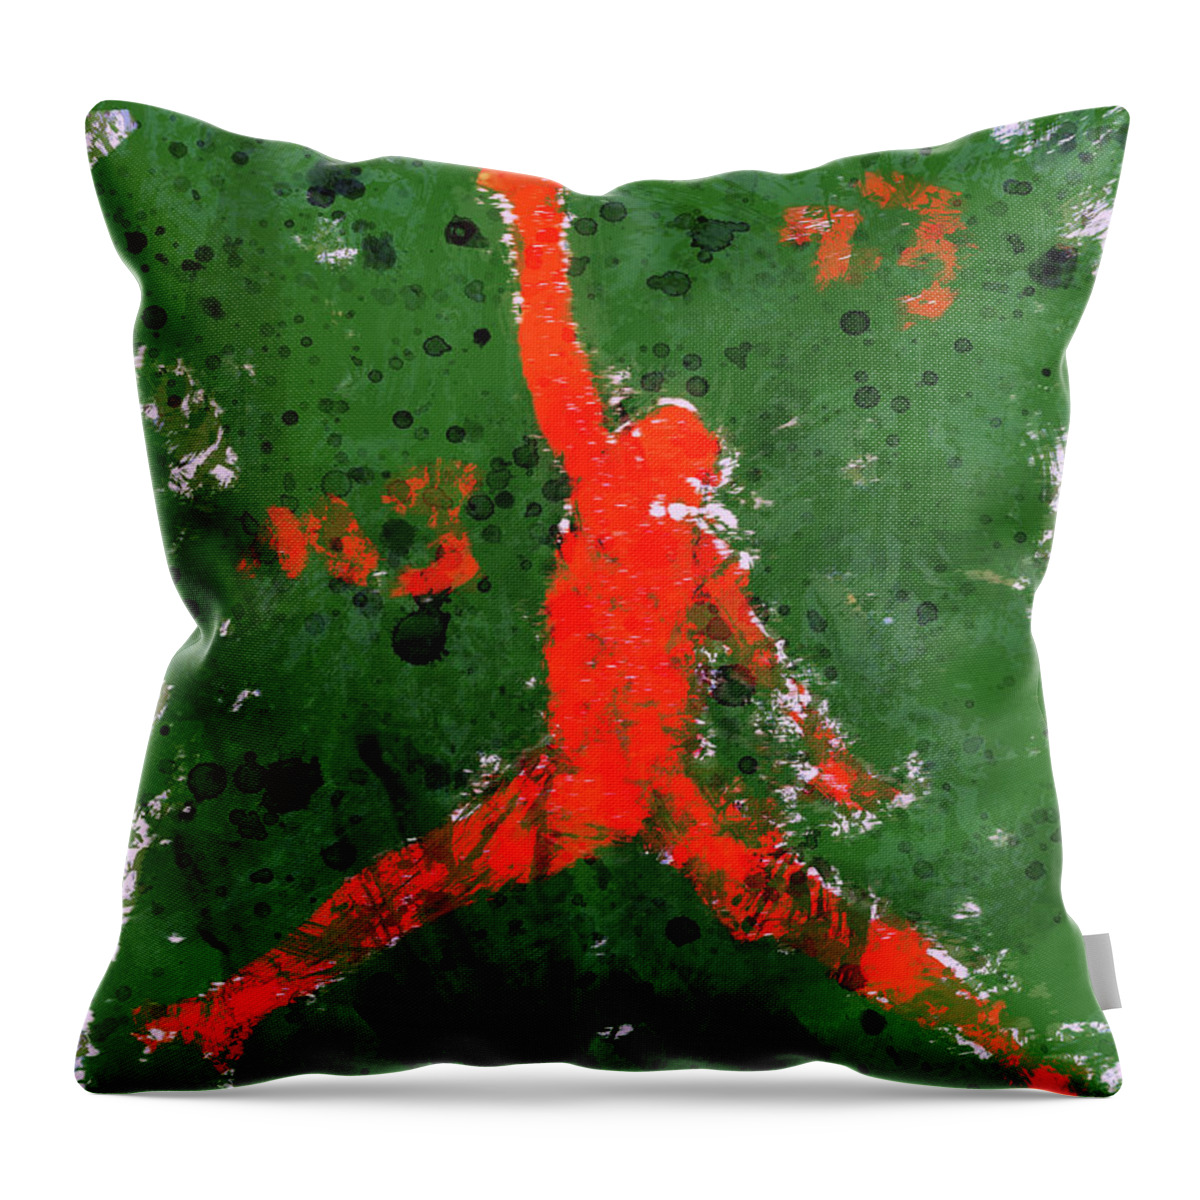 Michael Jordan Throw Pillow featuring the mixed media Michael Jordan Acrylic Paint Splatter 1a by Brian Reaves